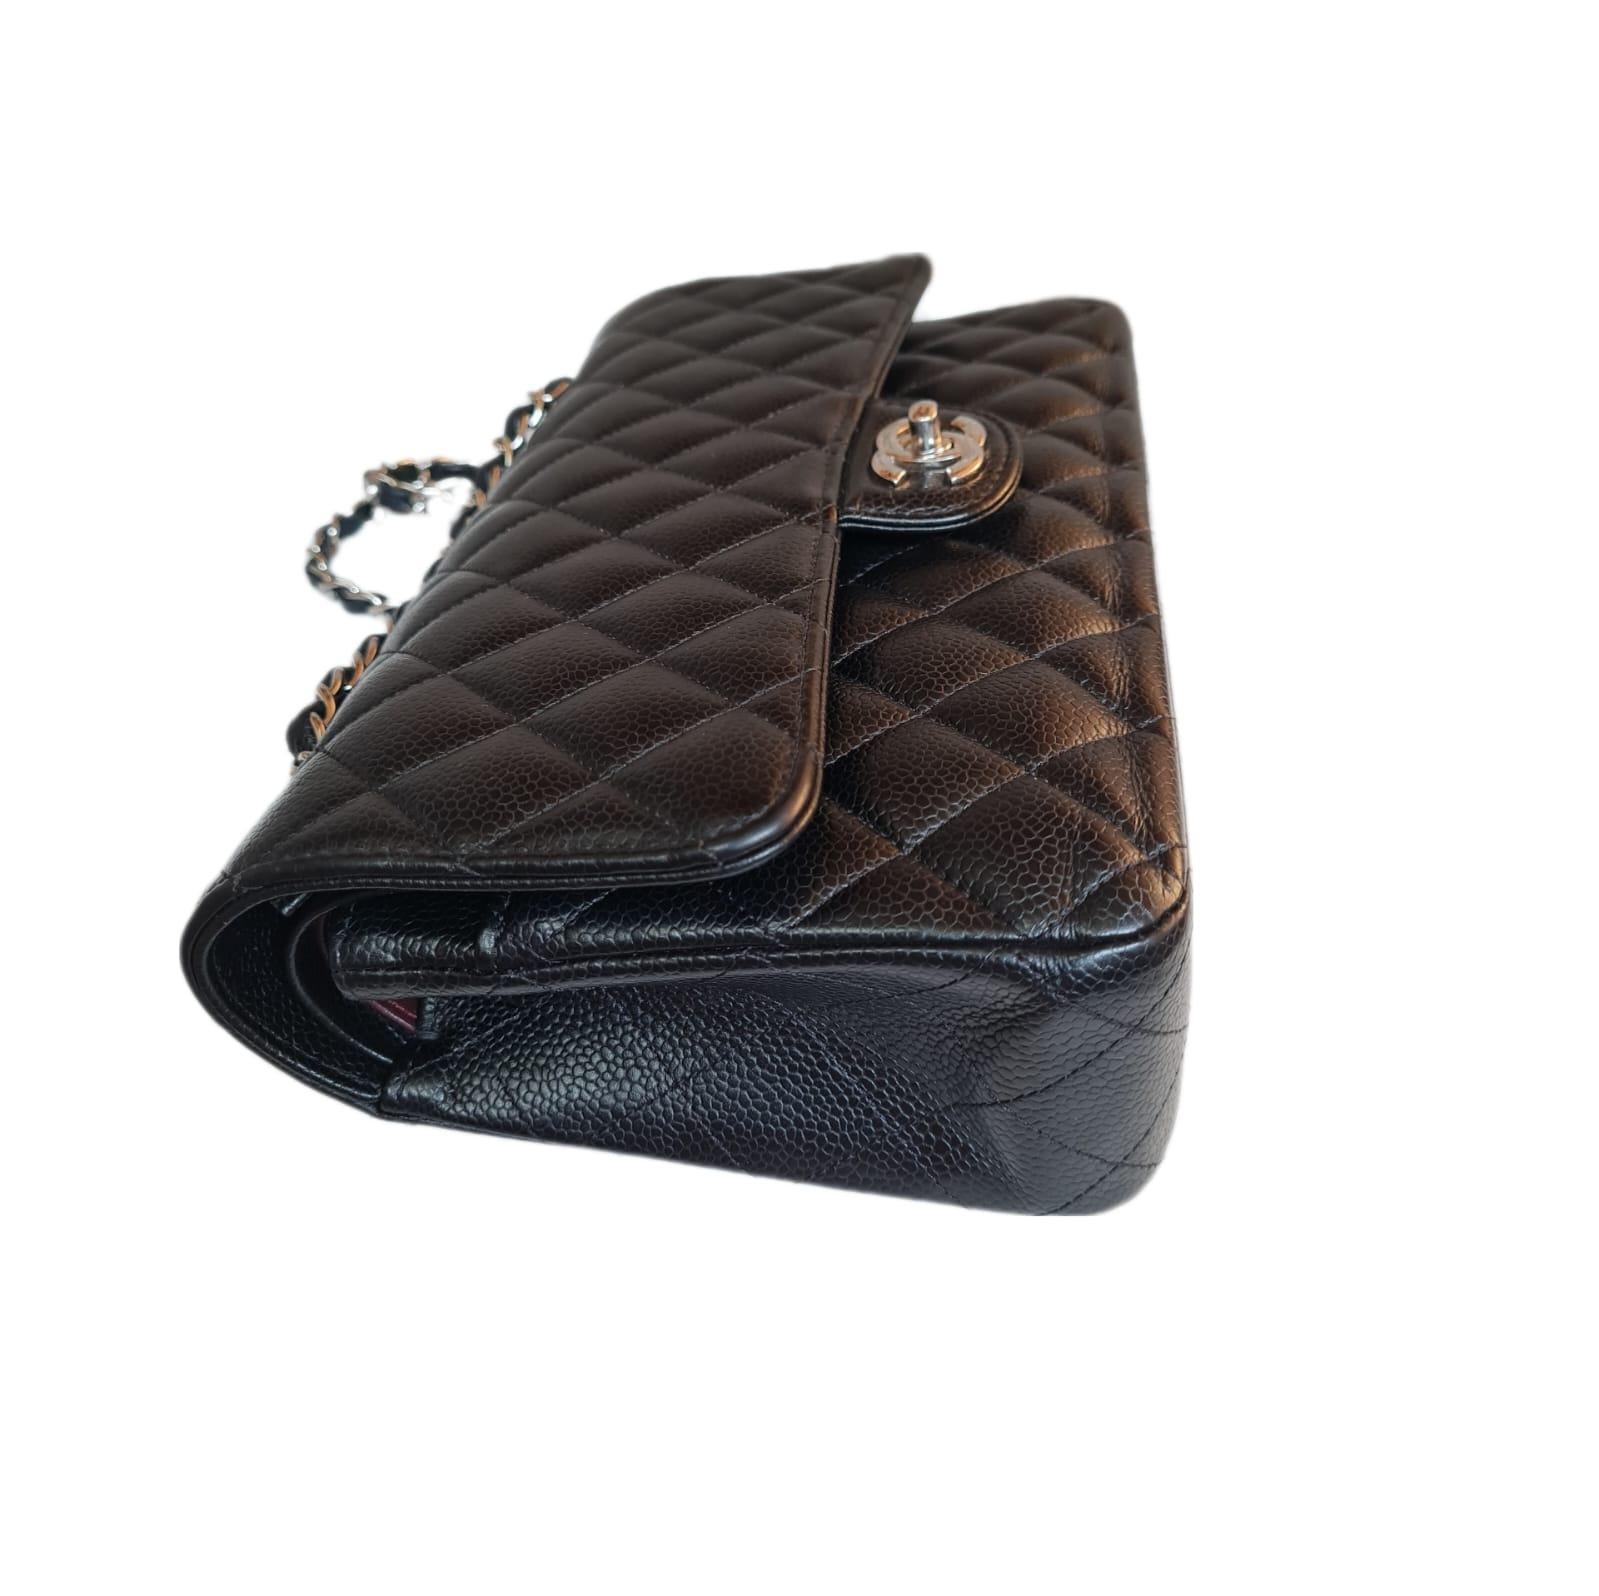 2021 Chanel Black Caviar Classic Double Flap Bag SHW 11